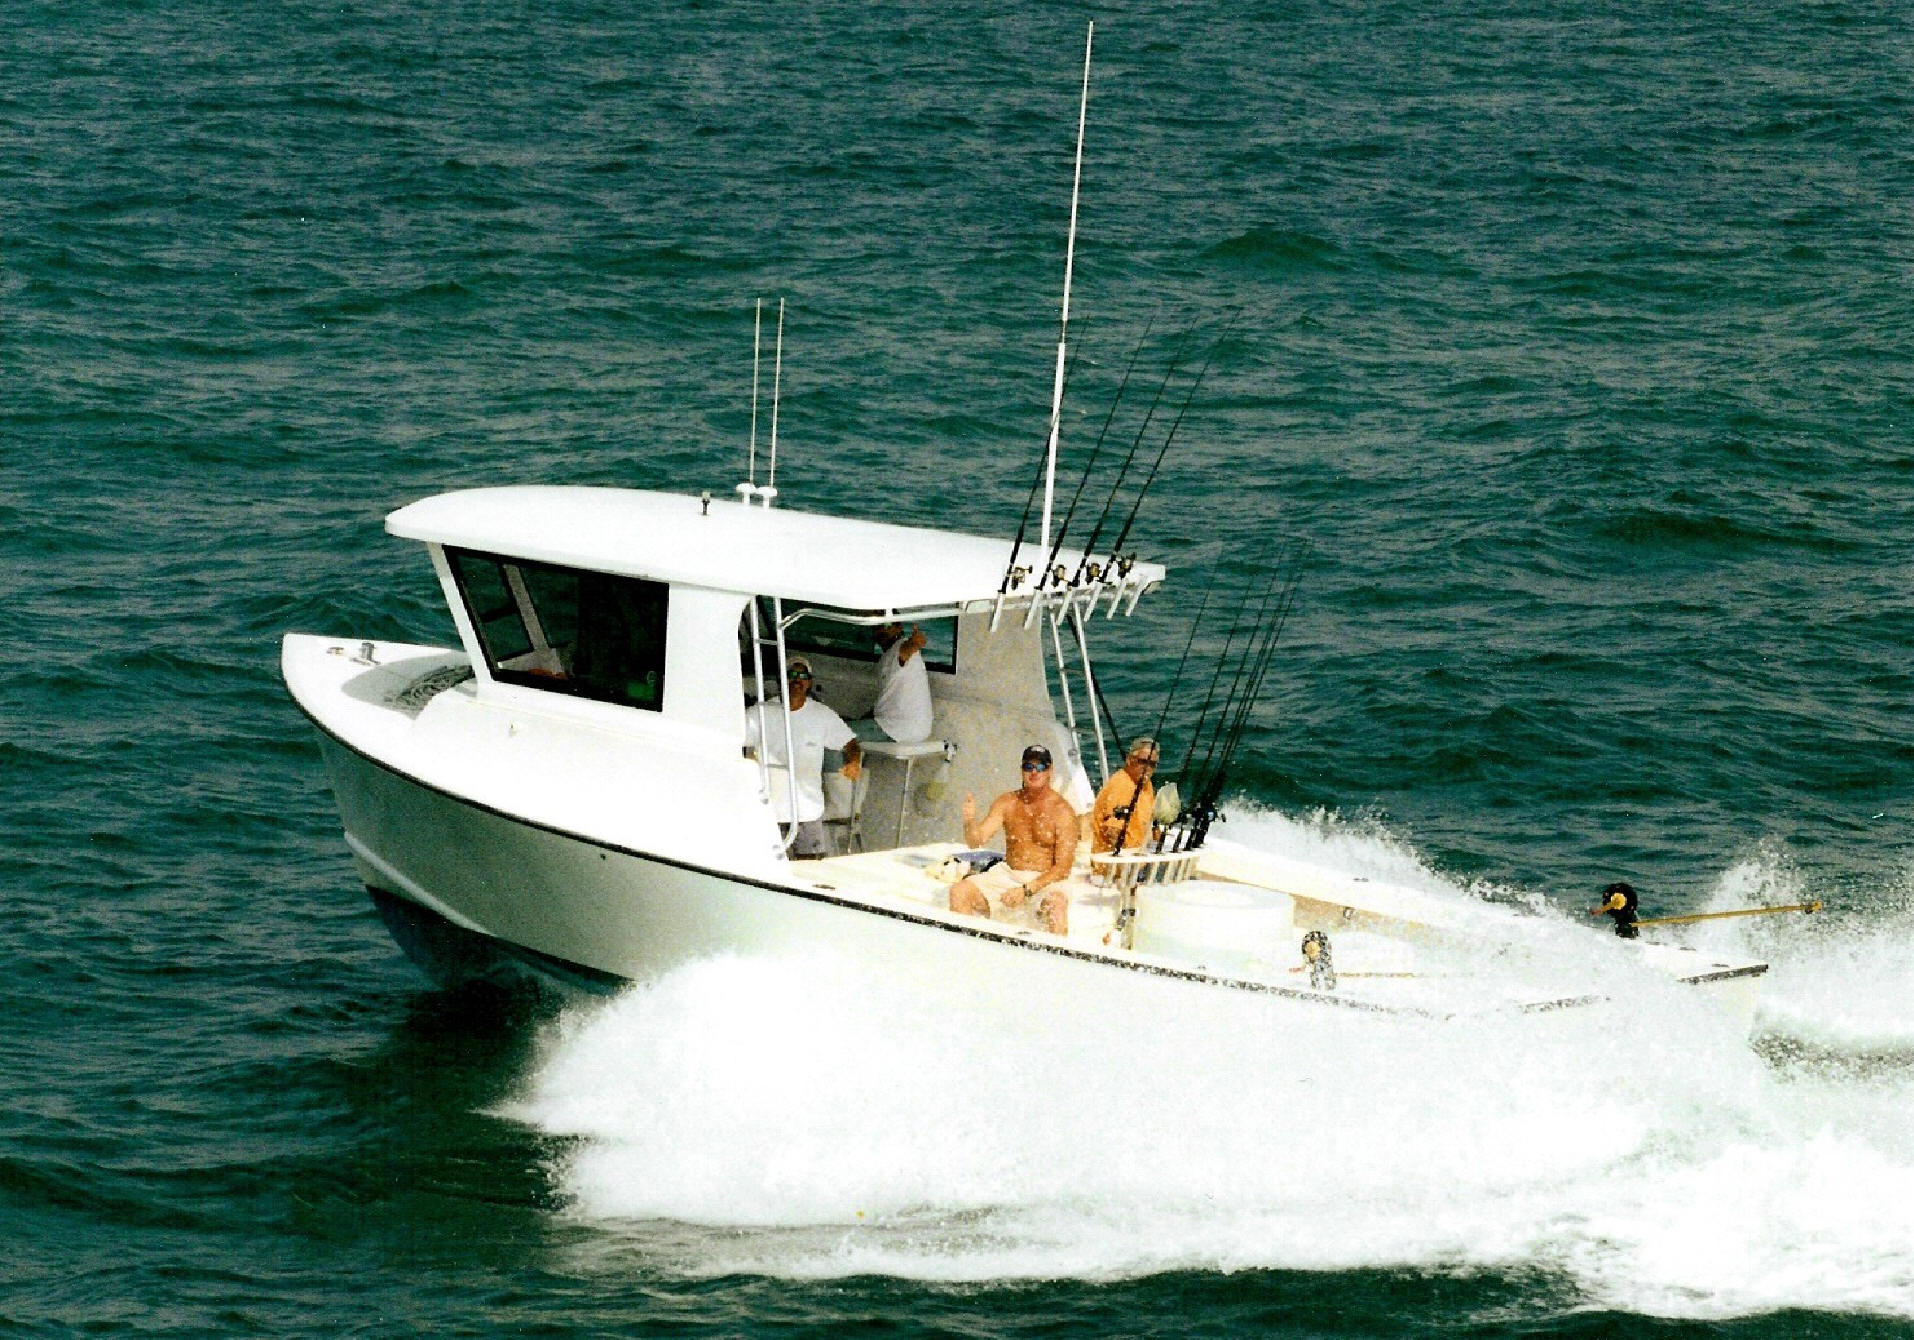 Deep Sea Fishing Charters/ Florida Charter fishing, Clearwater/Tampa